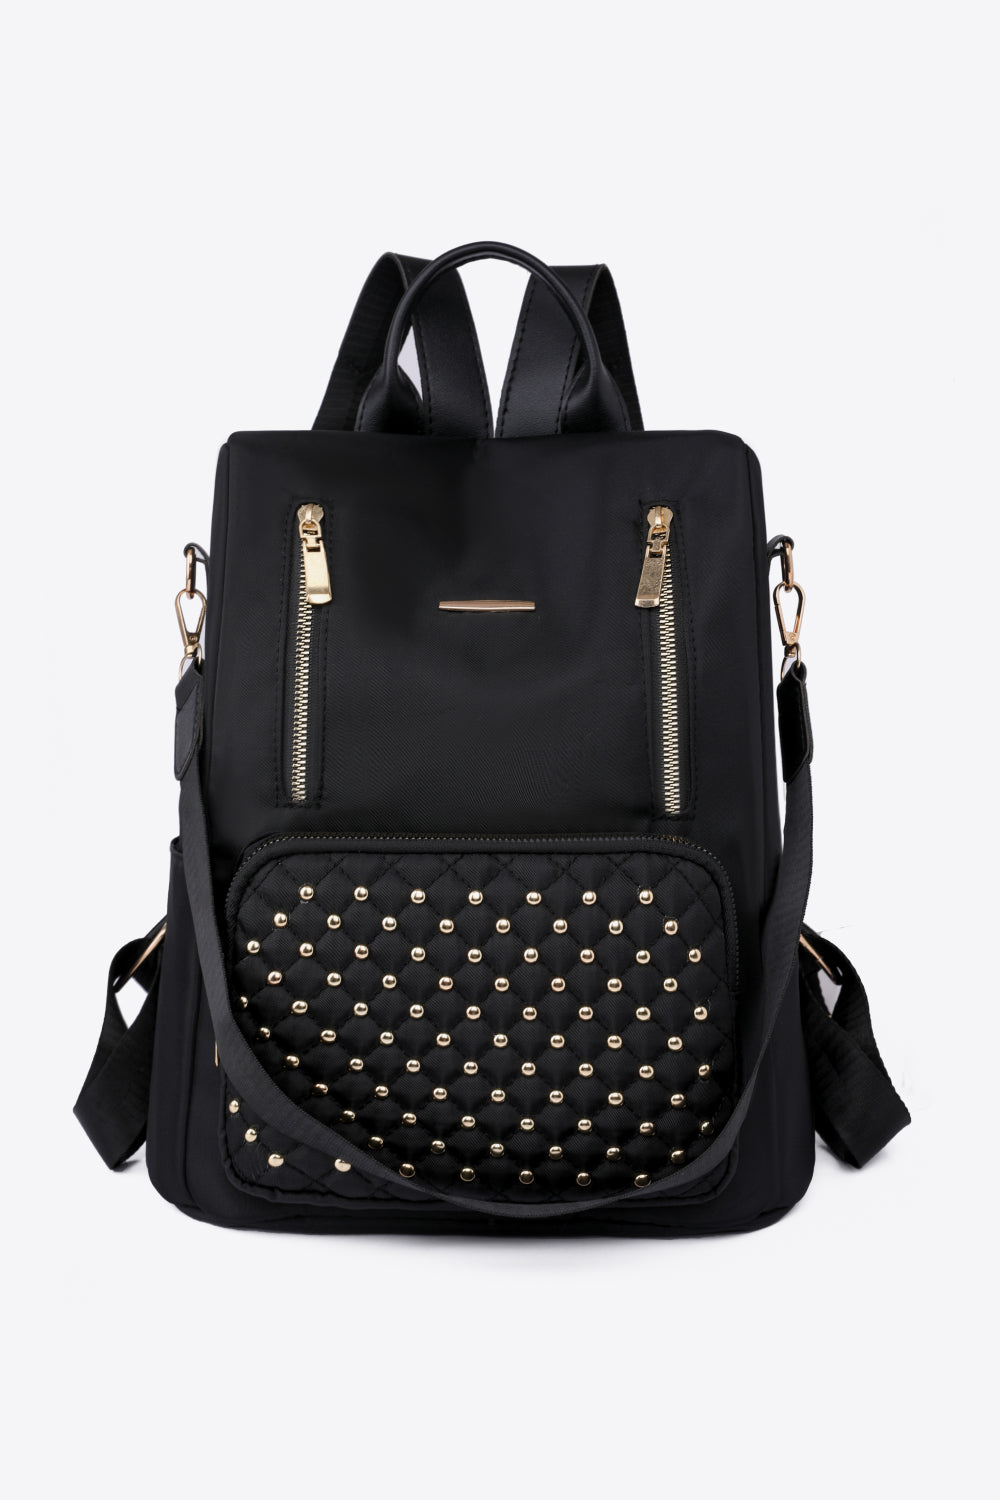 Zipper Pocket Beaded Backpack Black One Size by Trendsi | BlingxAddict